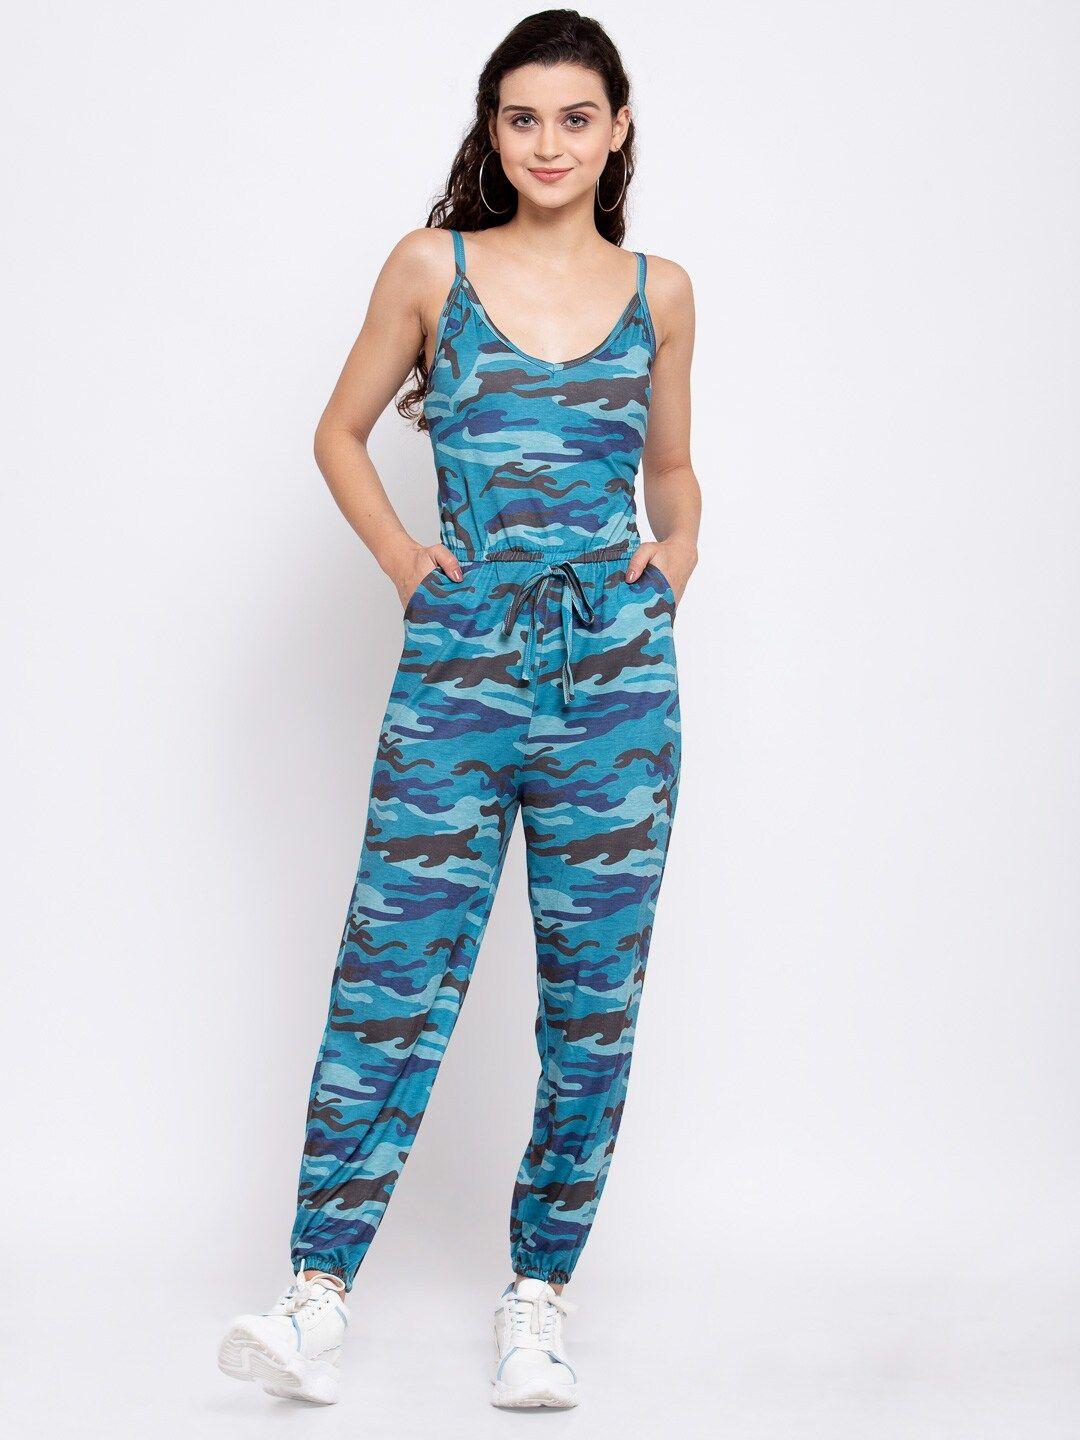 iki-chic-women-blue-&-grey-camouflage-printed-basic-jumpsuit